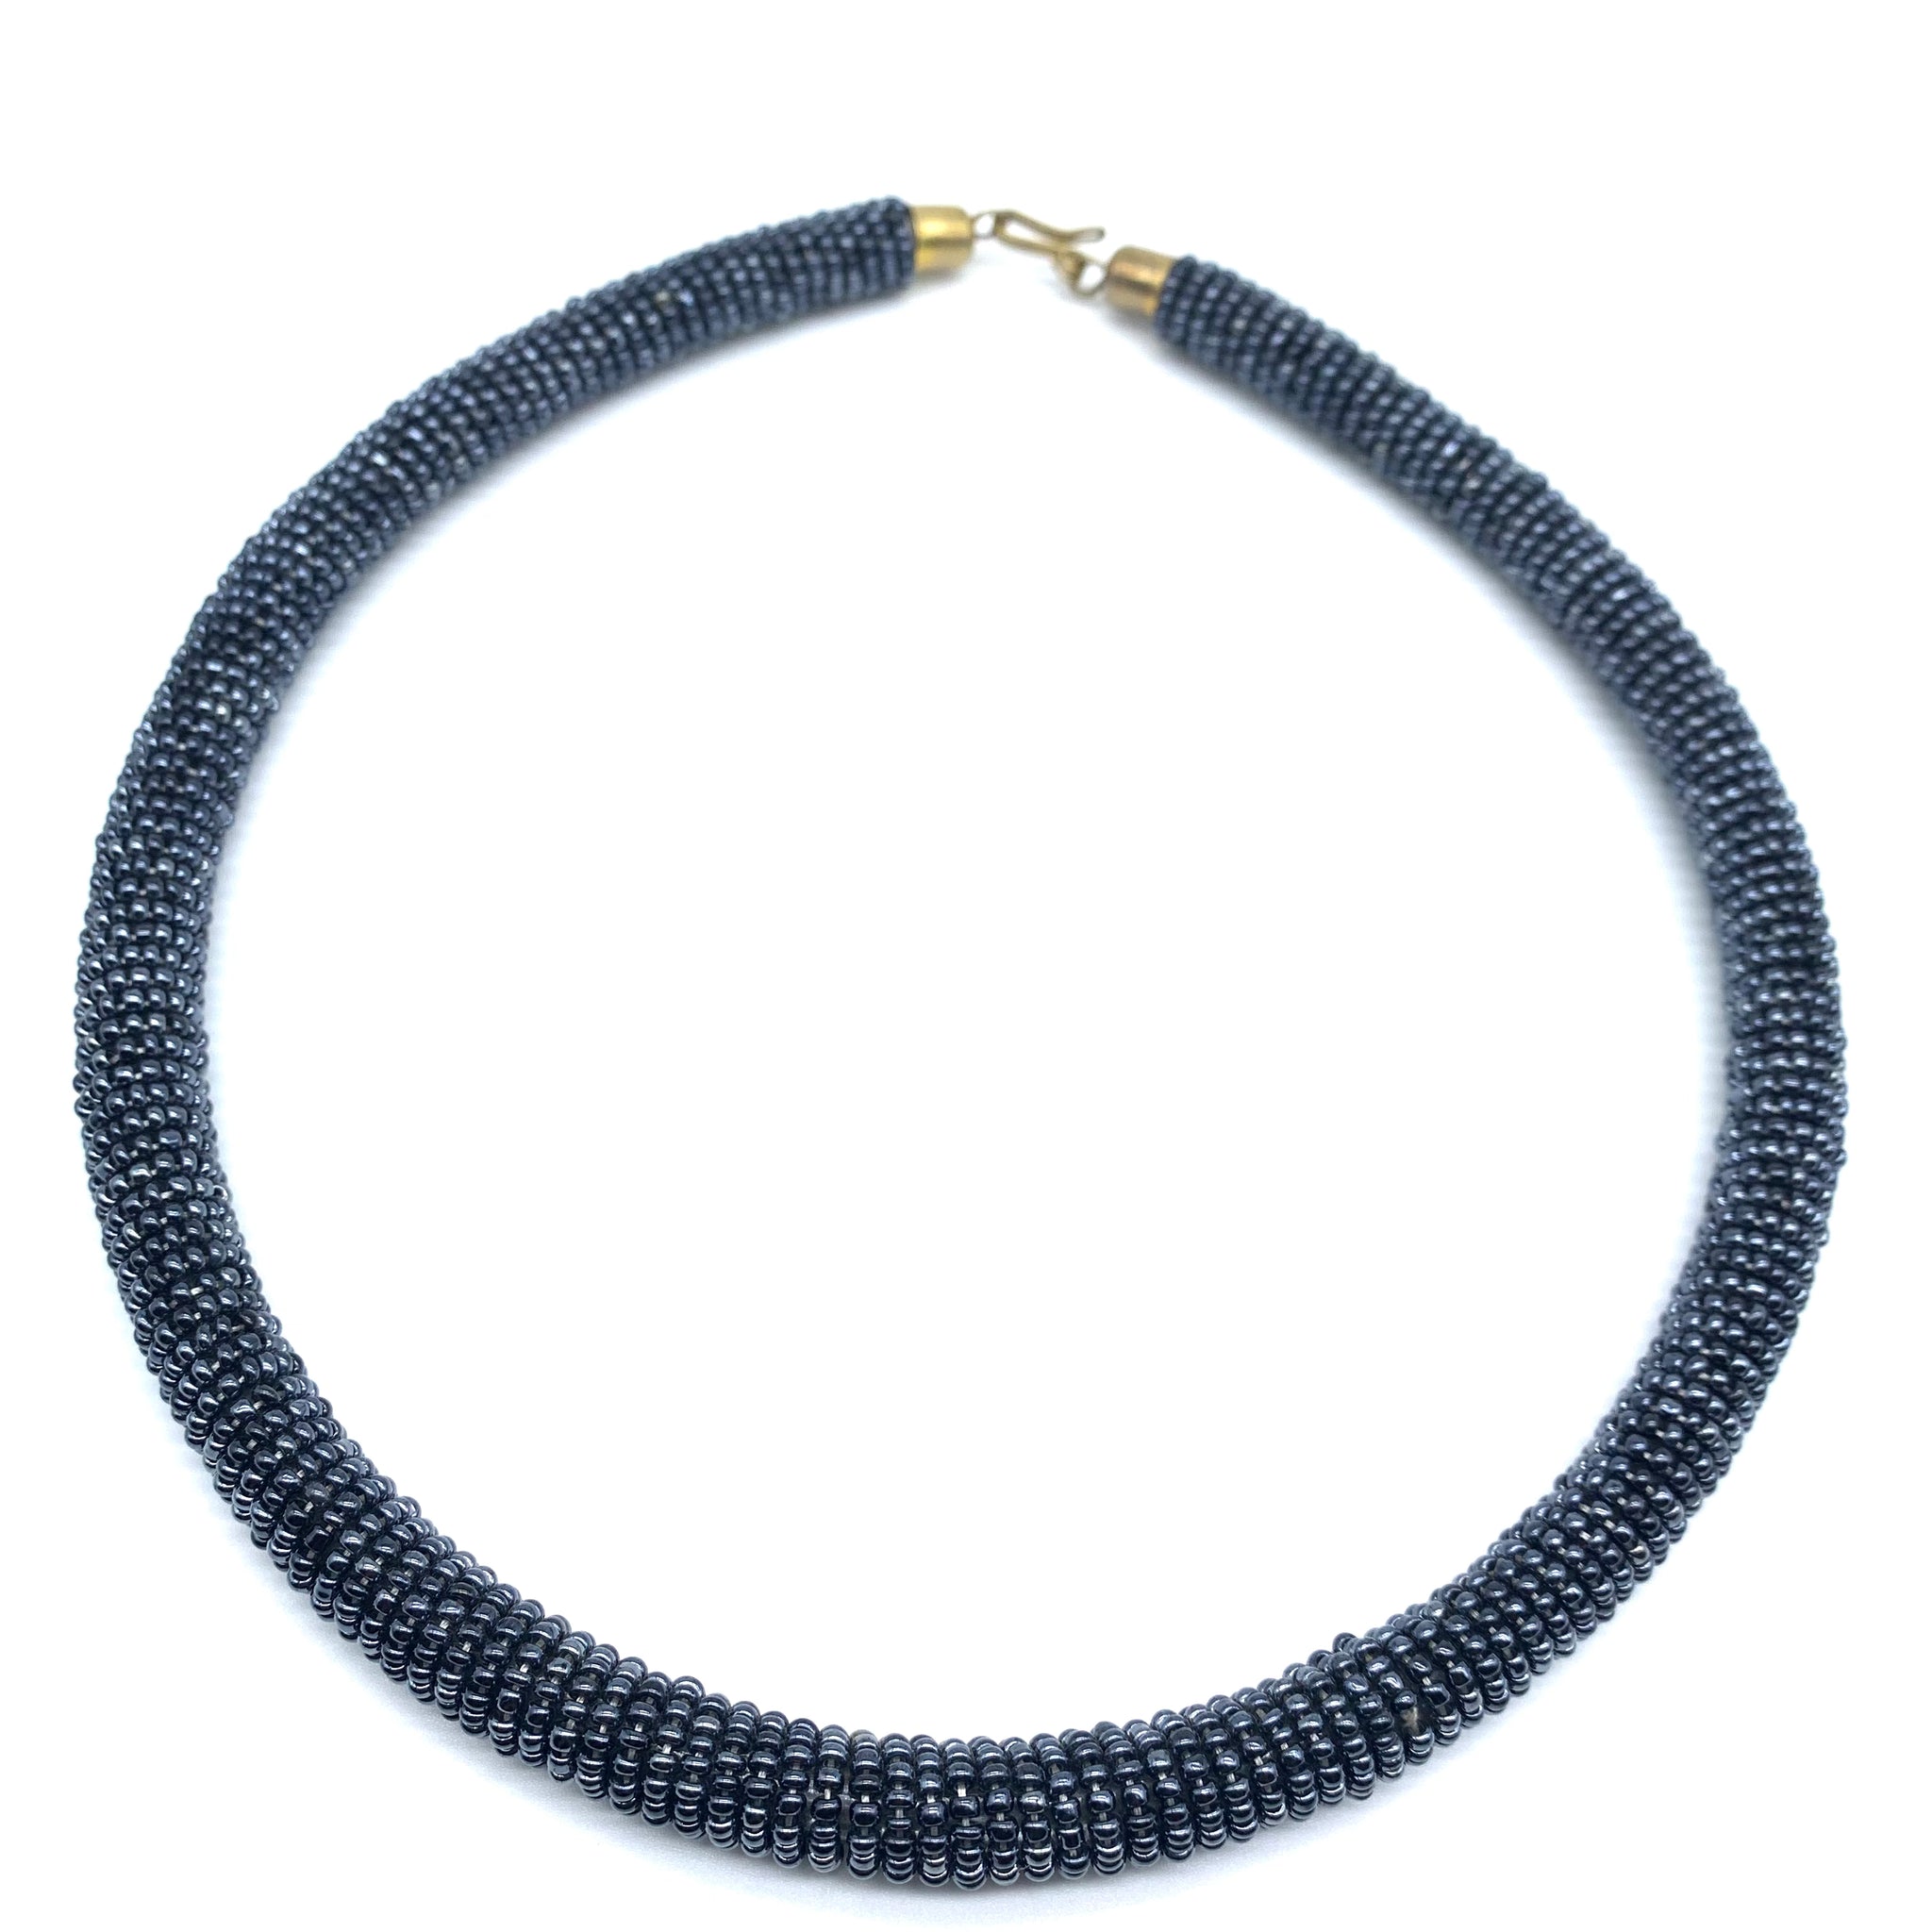 Bead Bangle Necklace- Metallic Blue Grey Colour Variation